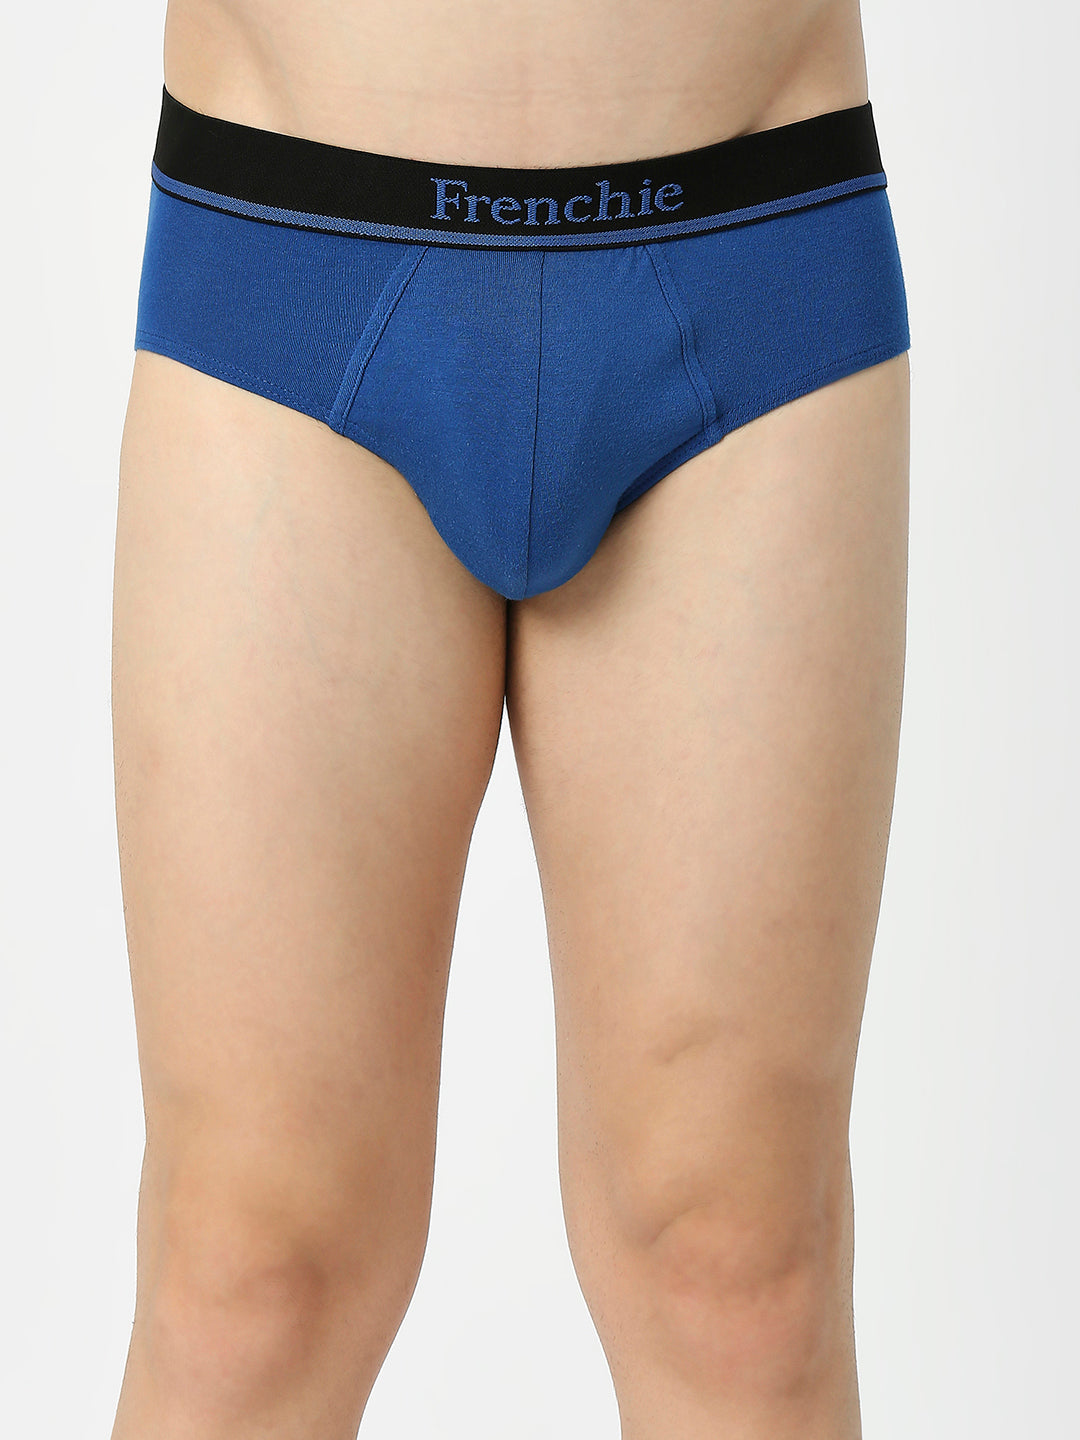 Buy Frenchie Pro Men's Cotton Briefs-Assorted Colours – VIP